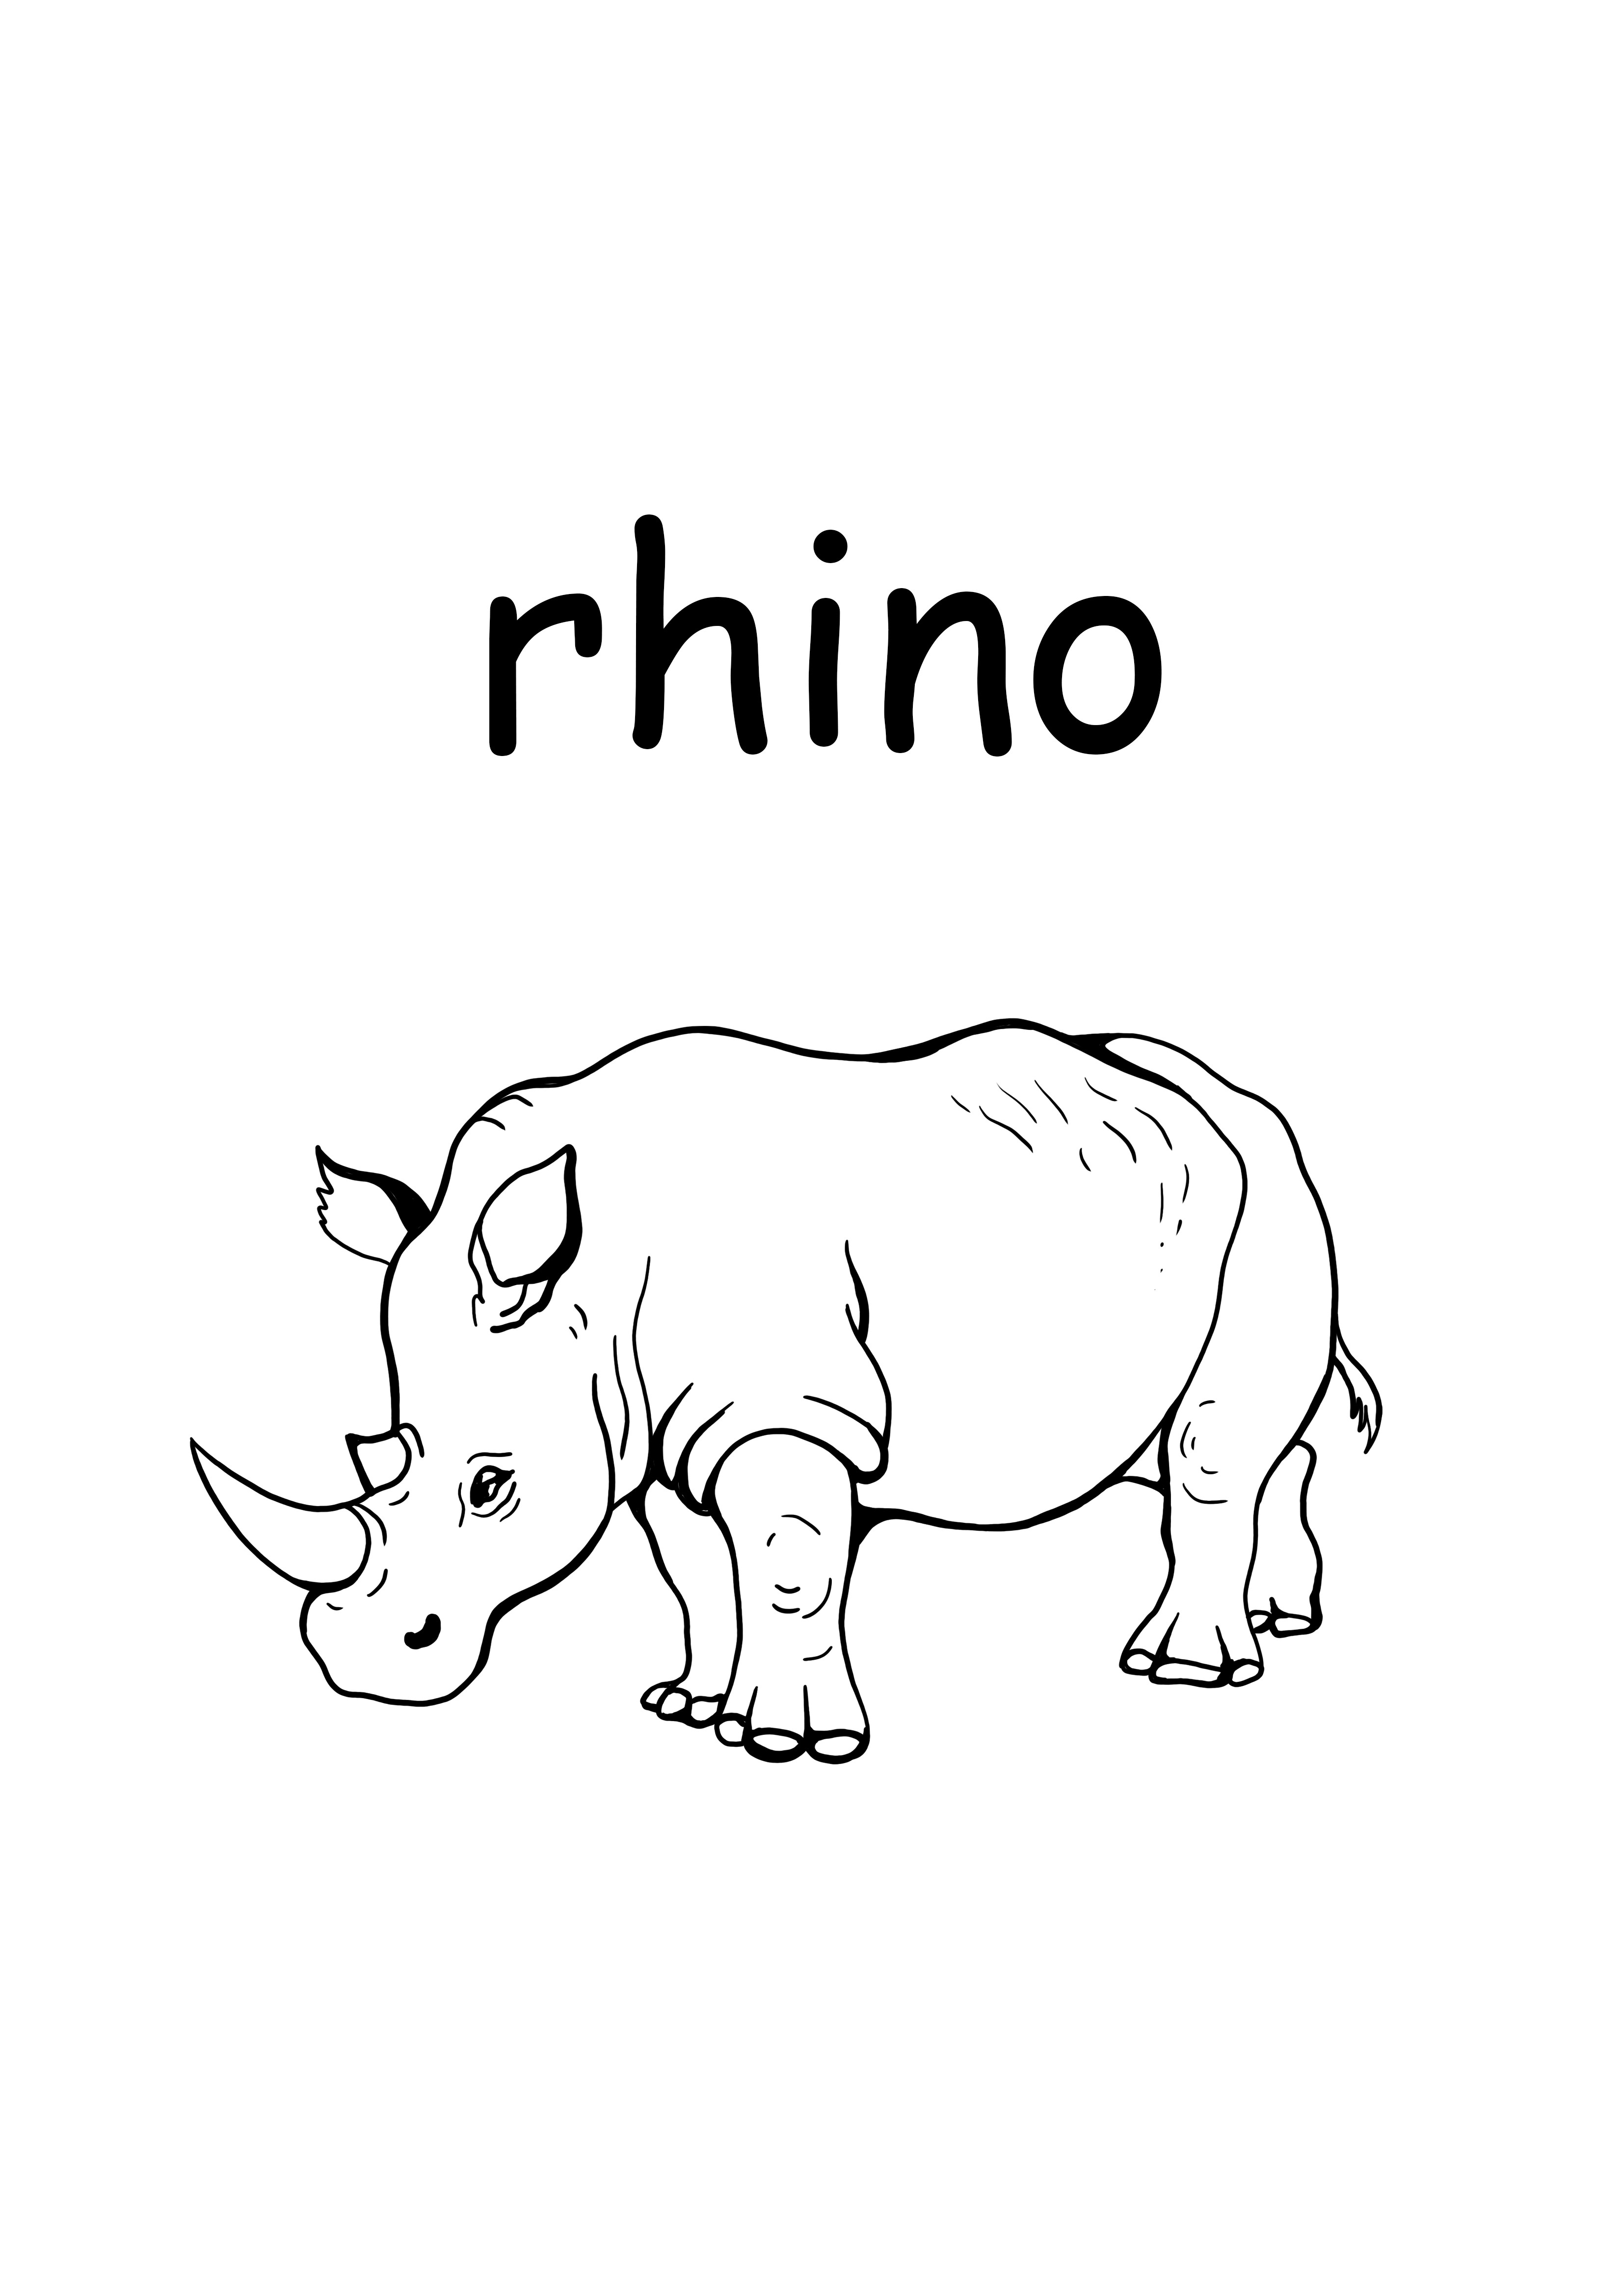 r para rinoceronte página para colorir de palavras minúsculas de graça